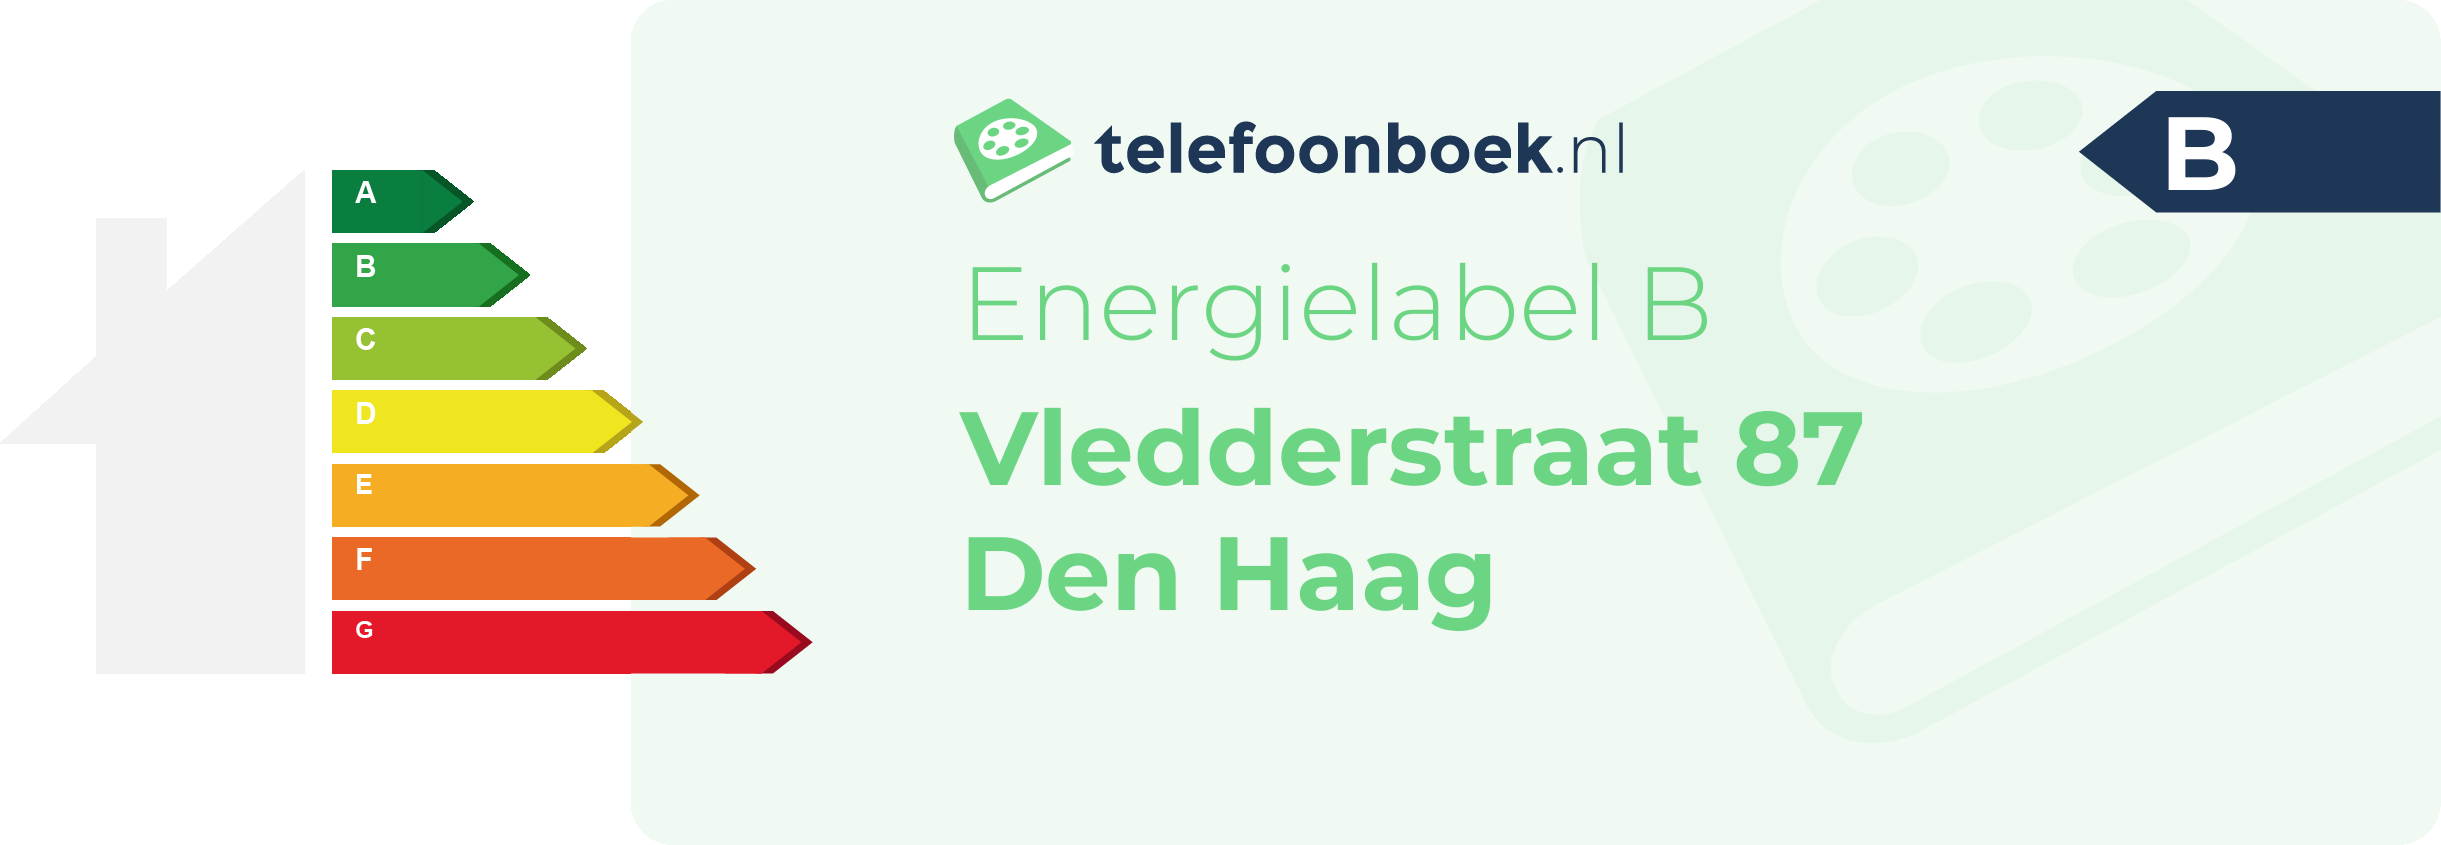 Energielabel Vledderstraat 87 Den Haag